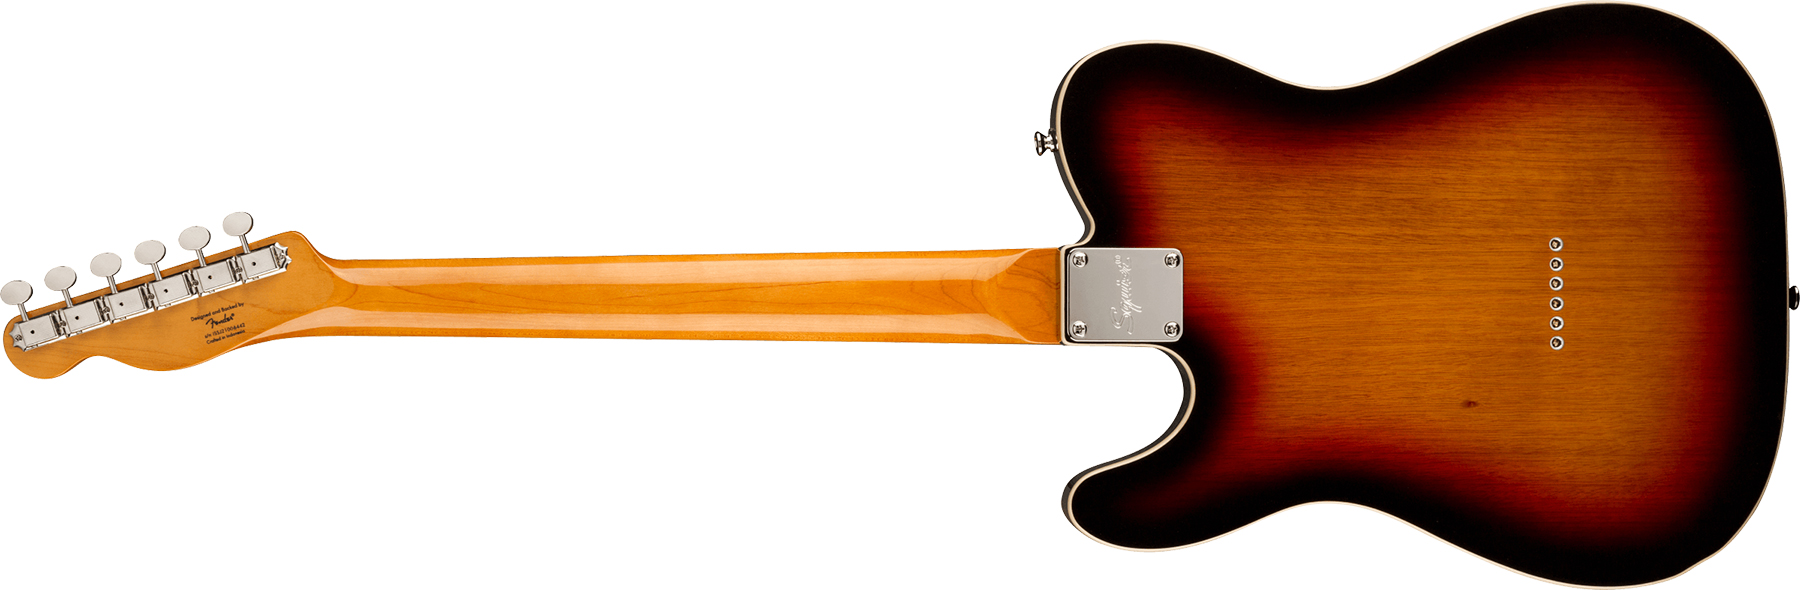 Squier Esquire Tele '60s Custom Classic Vibe Fsr Ltd Lau - 3 Color Sunburst - Tel shape electric guitar - Variation 1